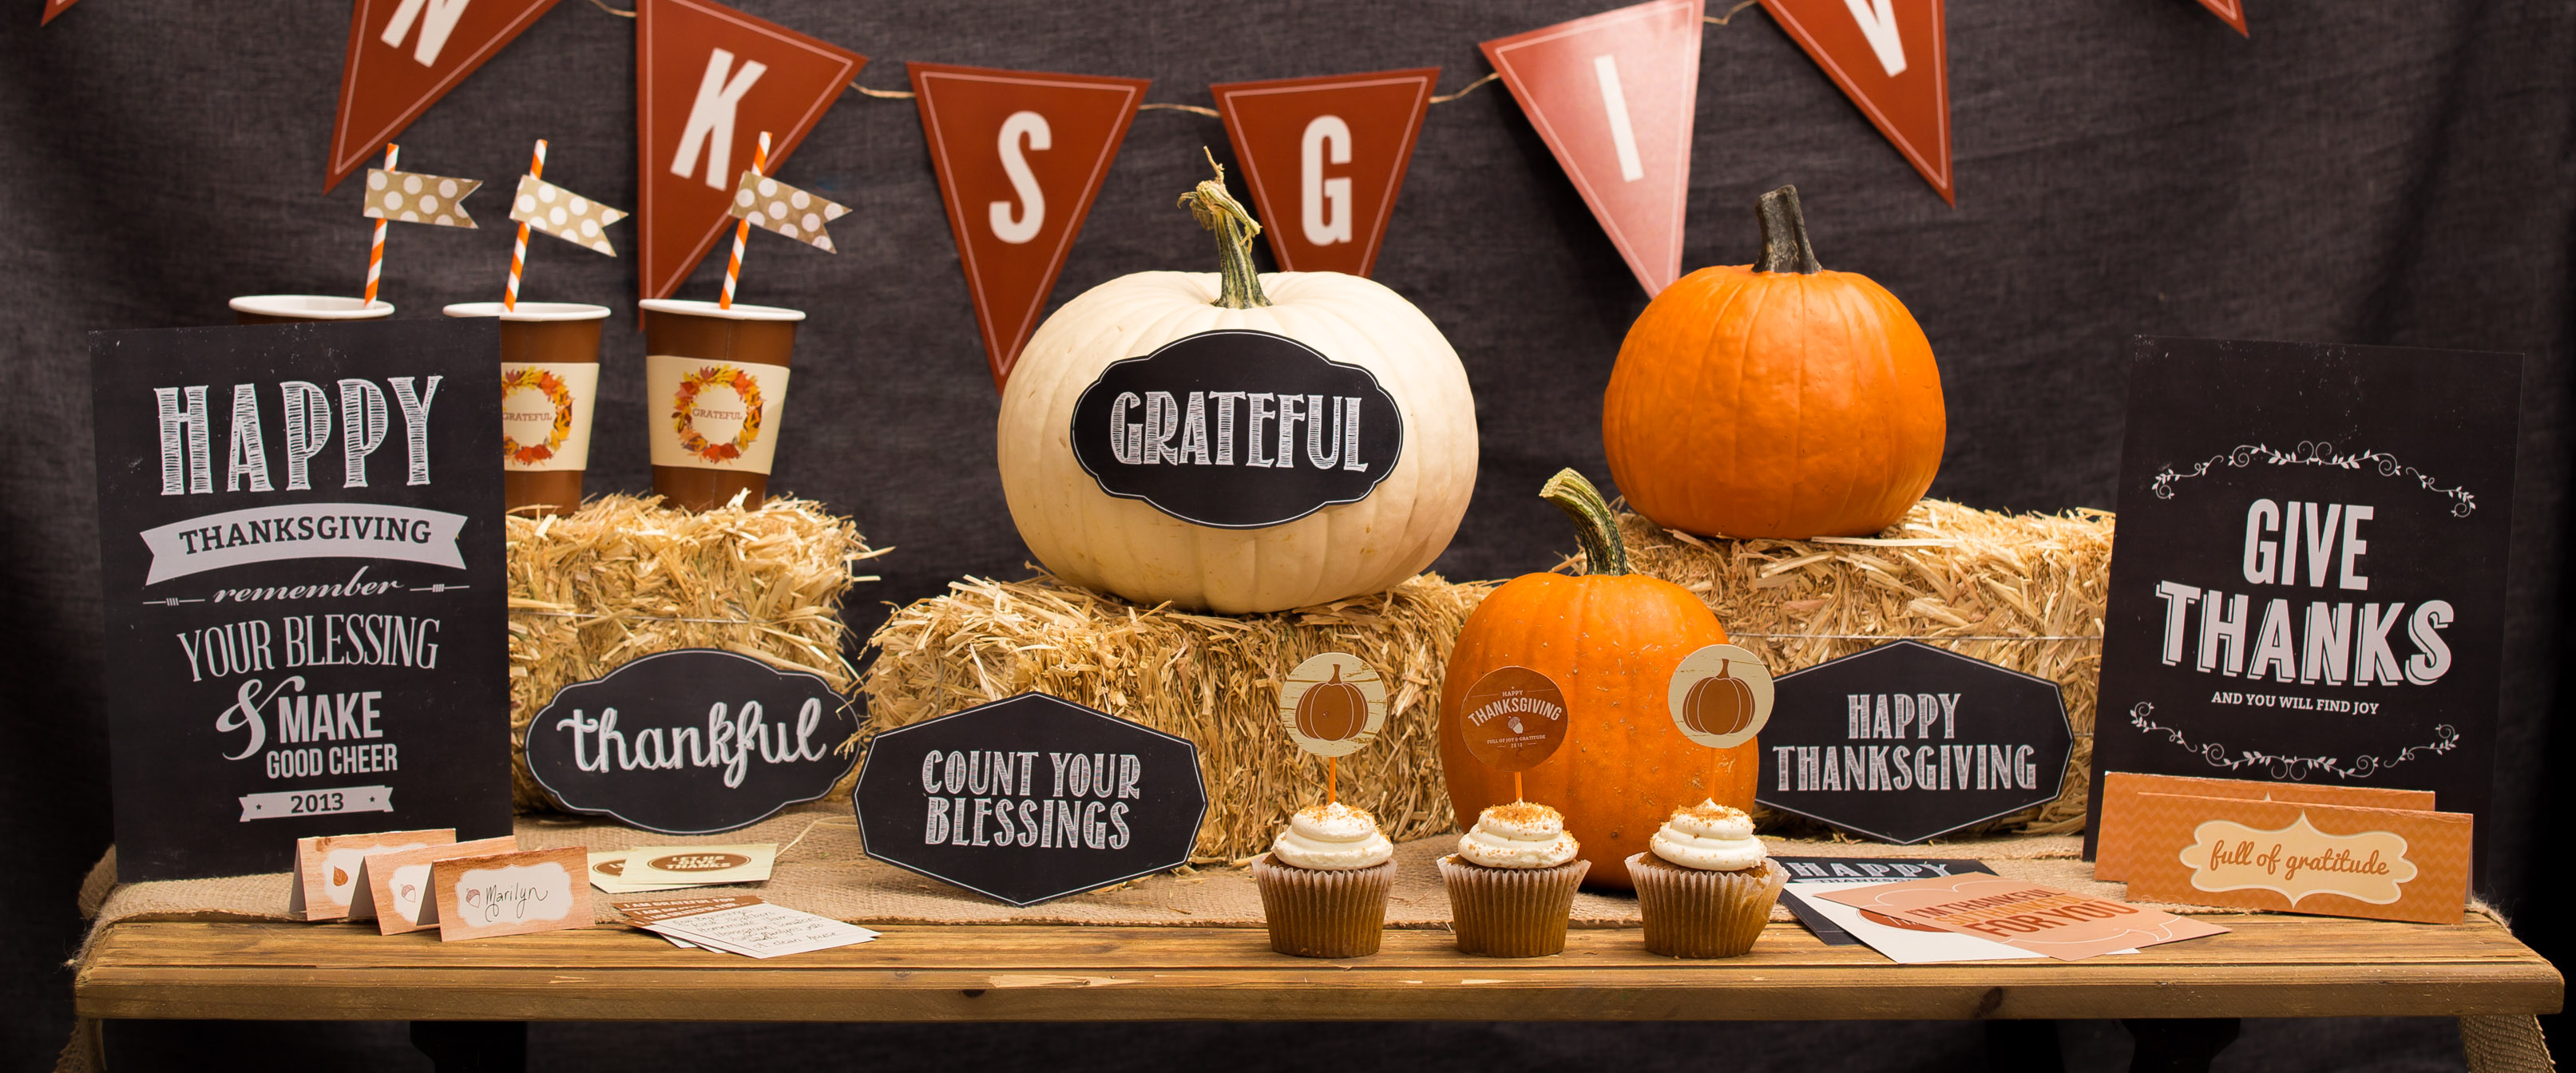 holiday, thanksgiving, message, pumpkin